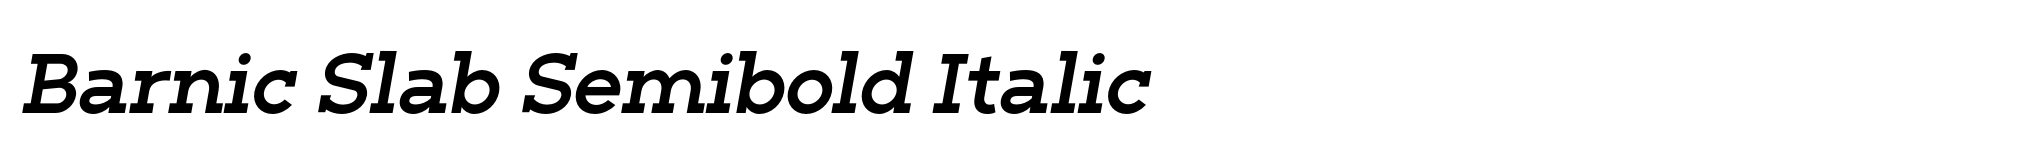 Barnic Slab Semibold Italic image